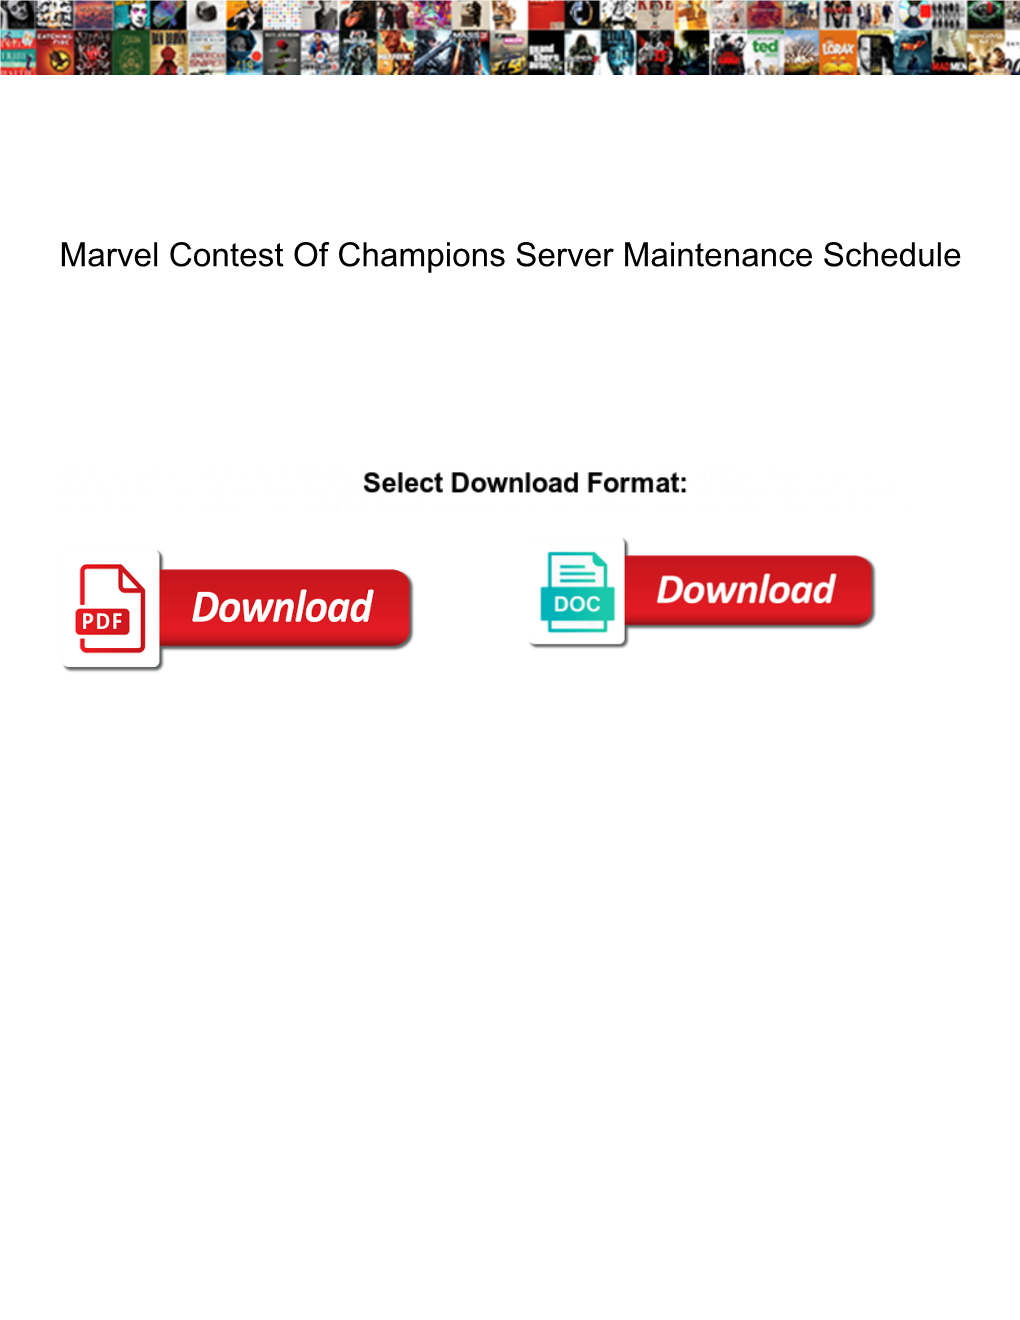 Marvel Contest of Champions Server Maintenance Schedule